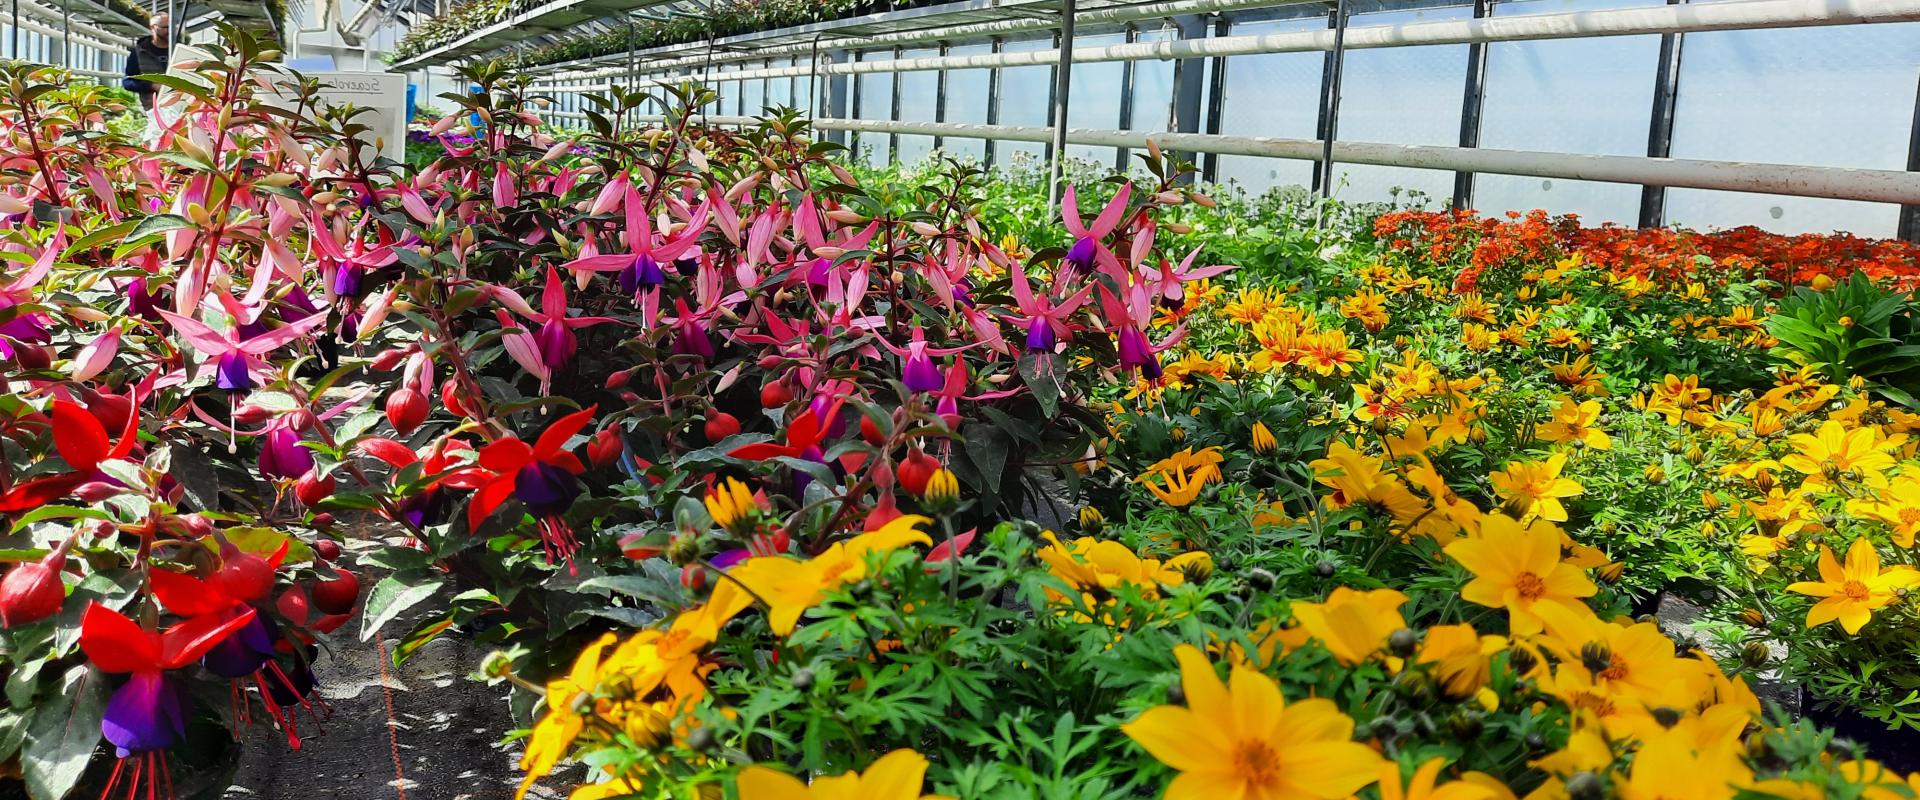 Talstein nursery - Flowers in the greenhouse